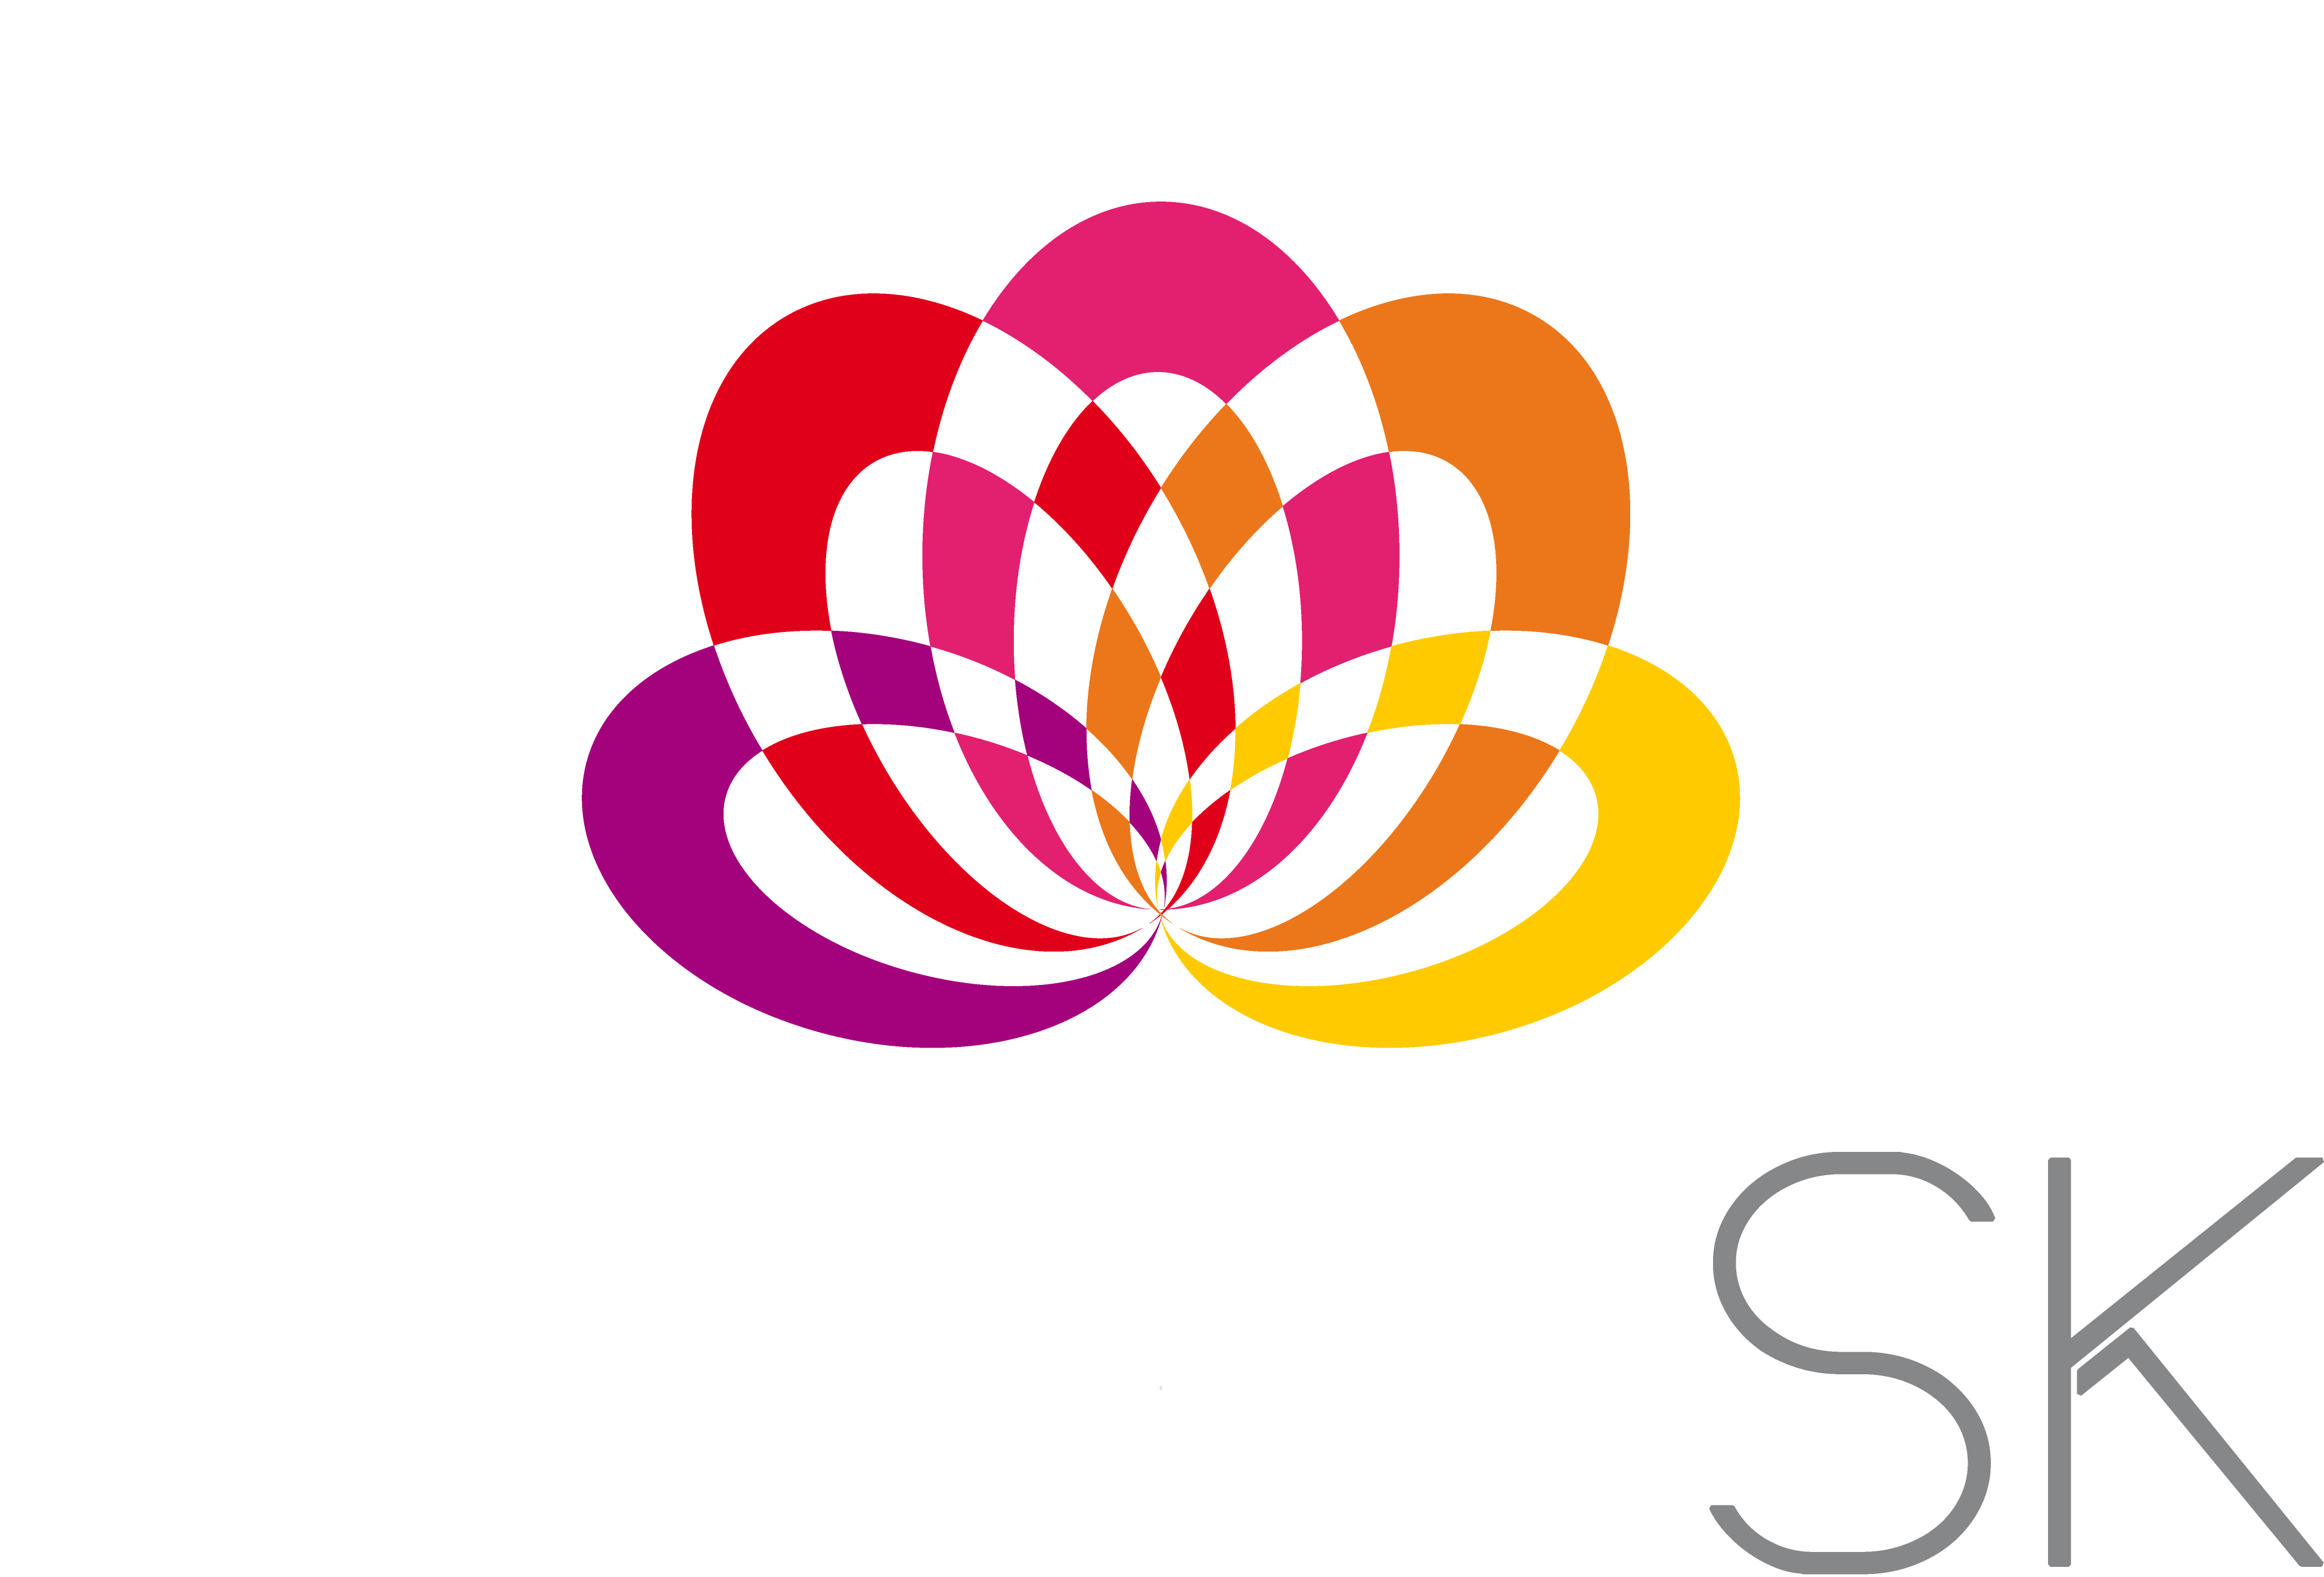 TRADUSK Tradusk – Традюск – переводы Logo